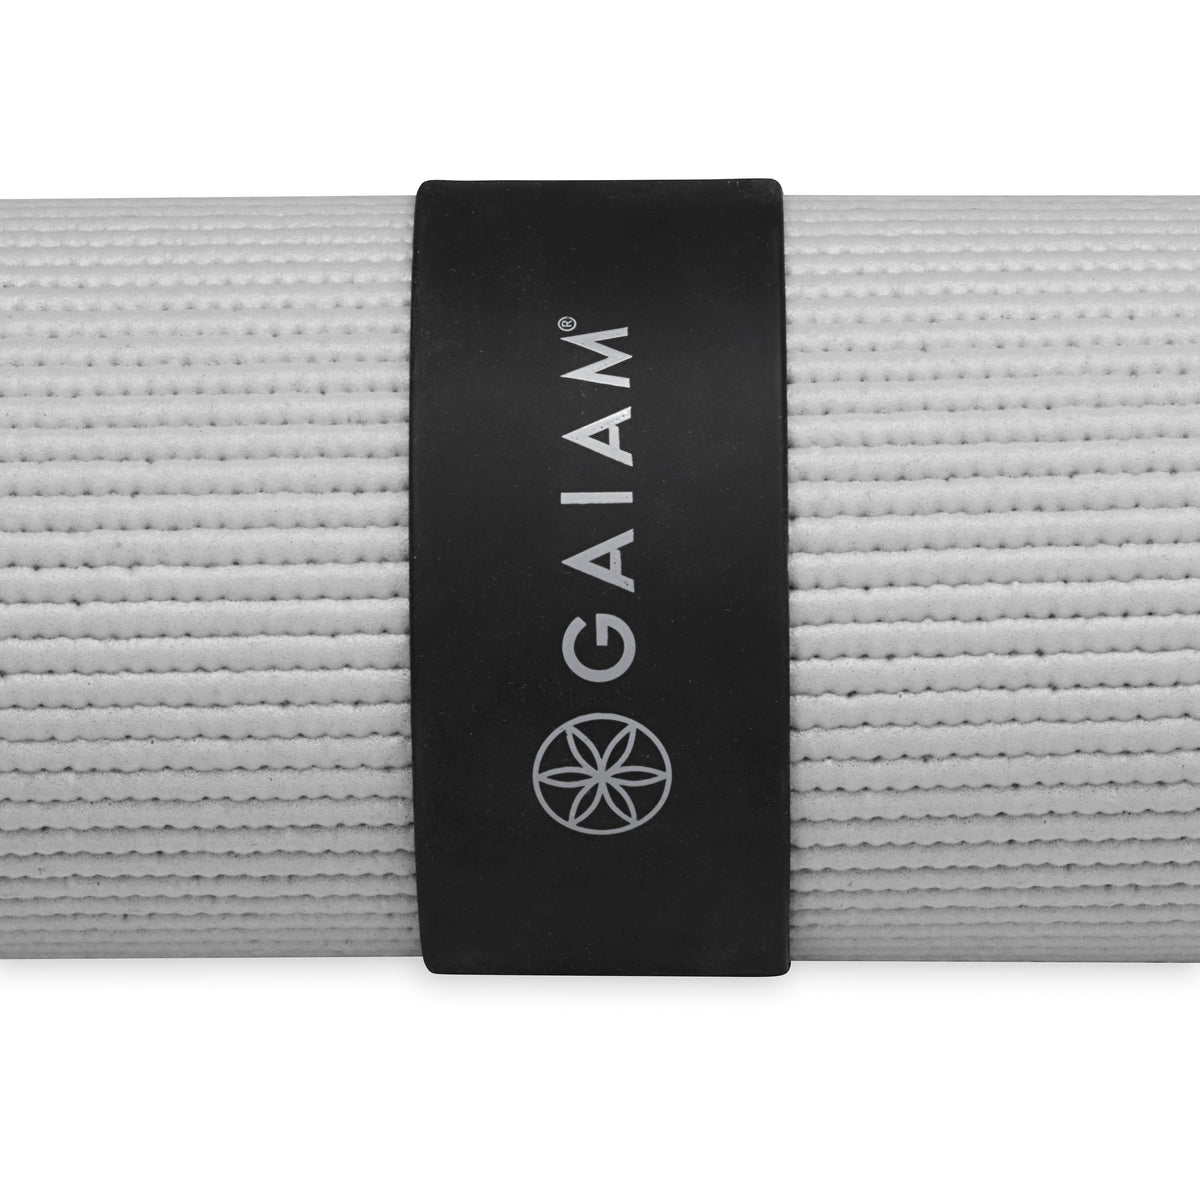 Yoga Mat Slap Band around mat